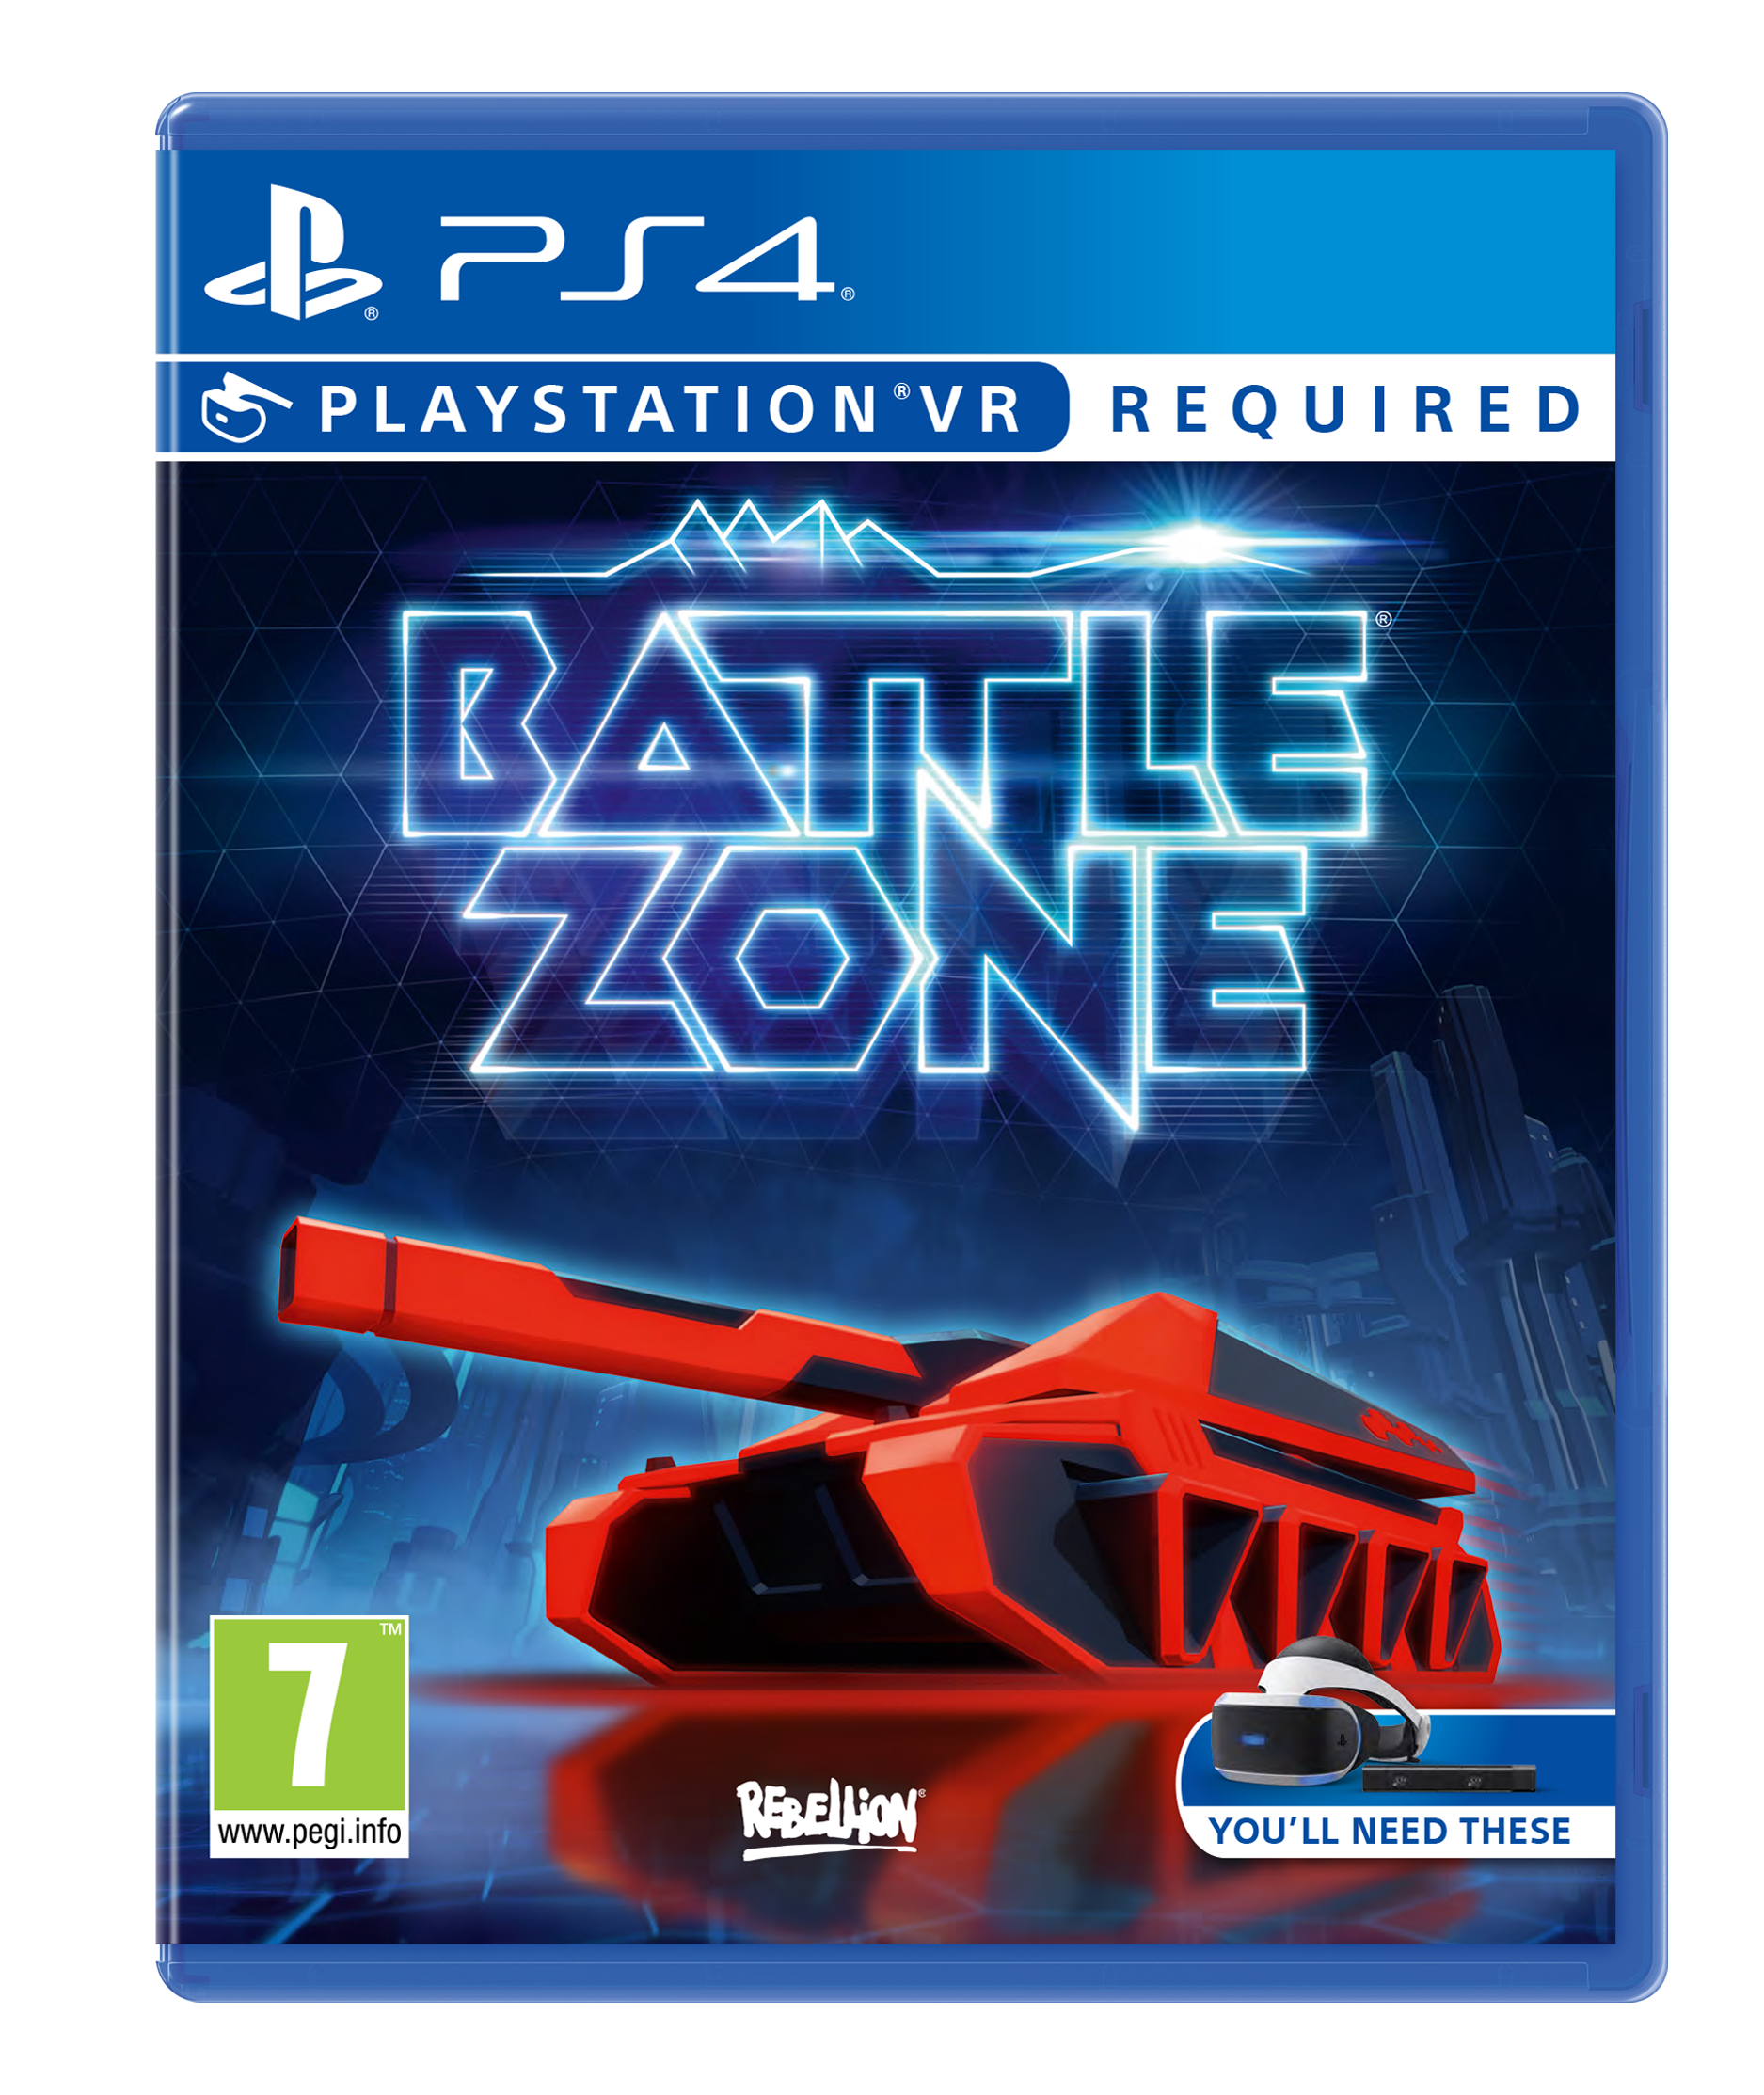 Battlezone (PSVR)